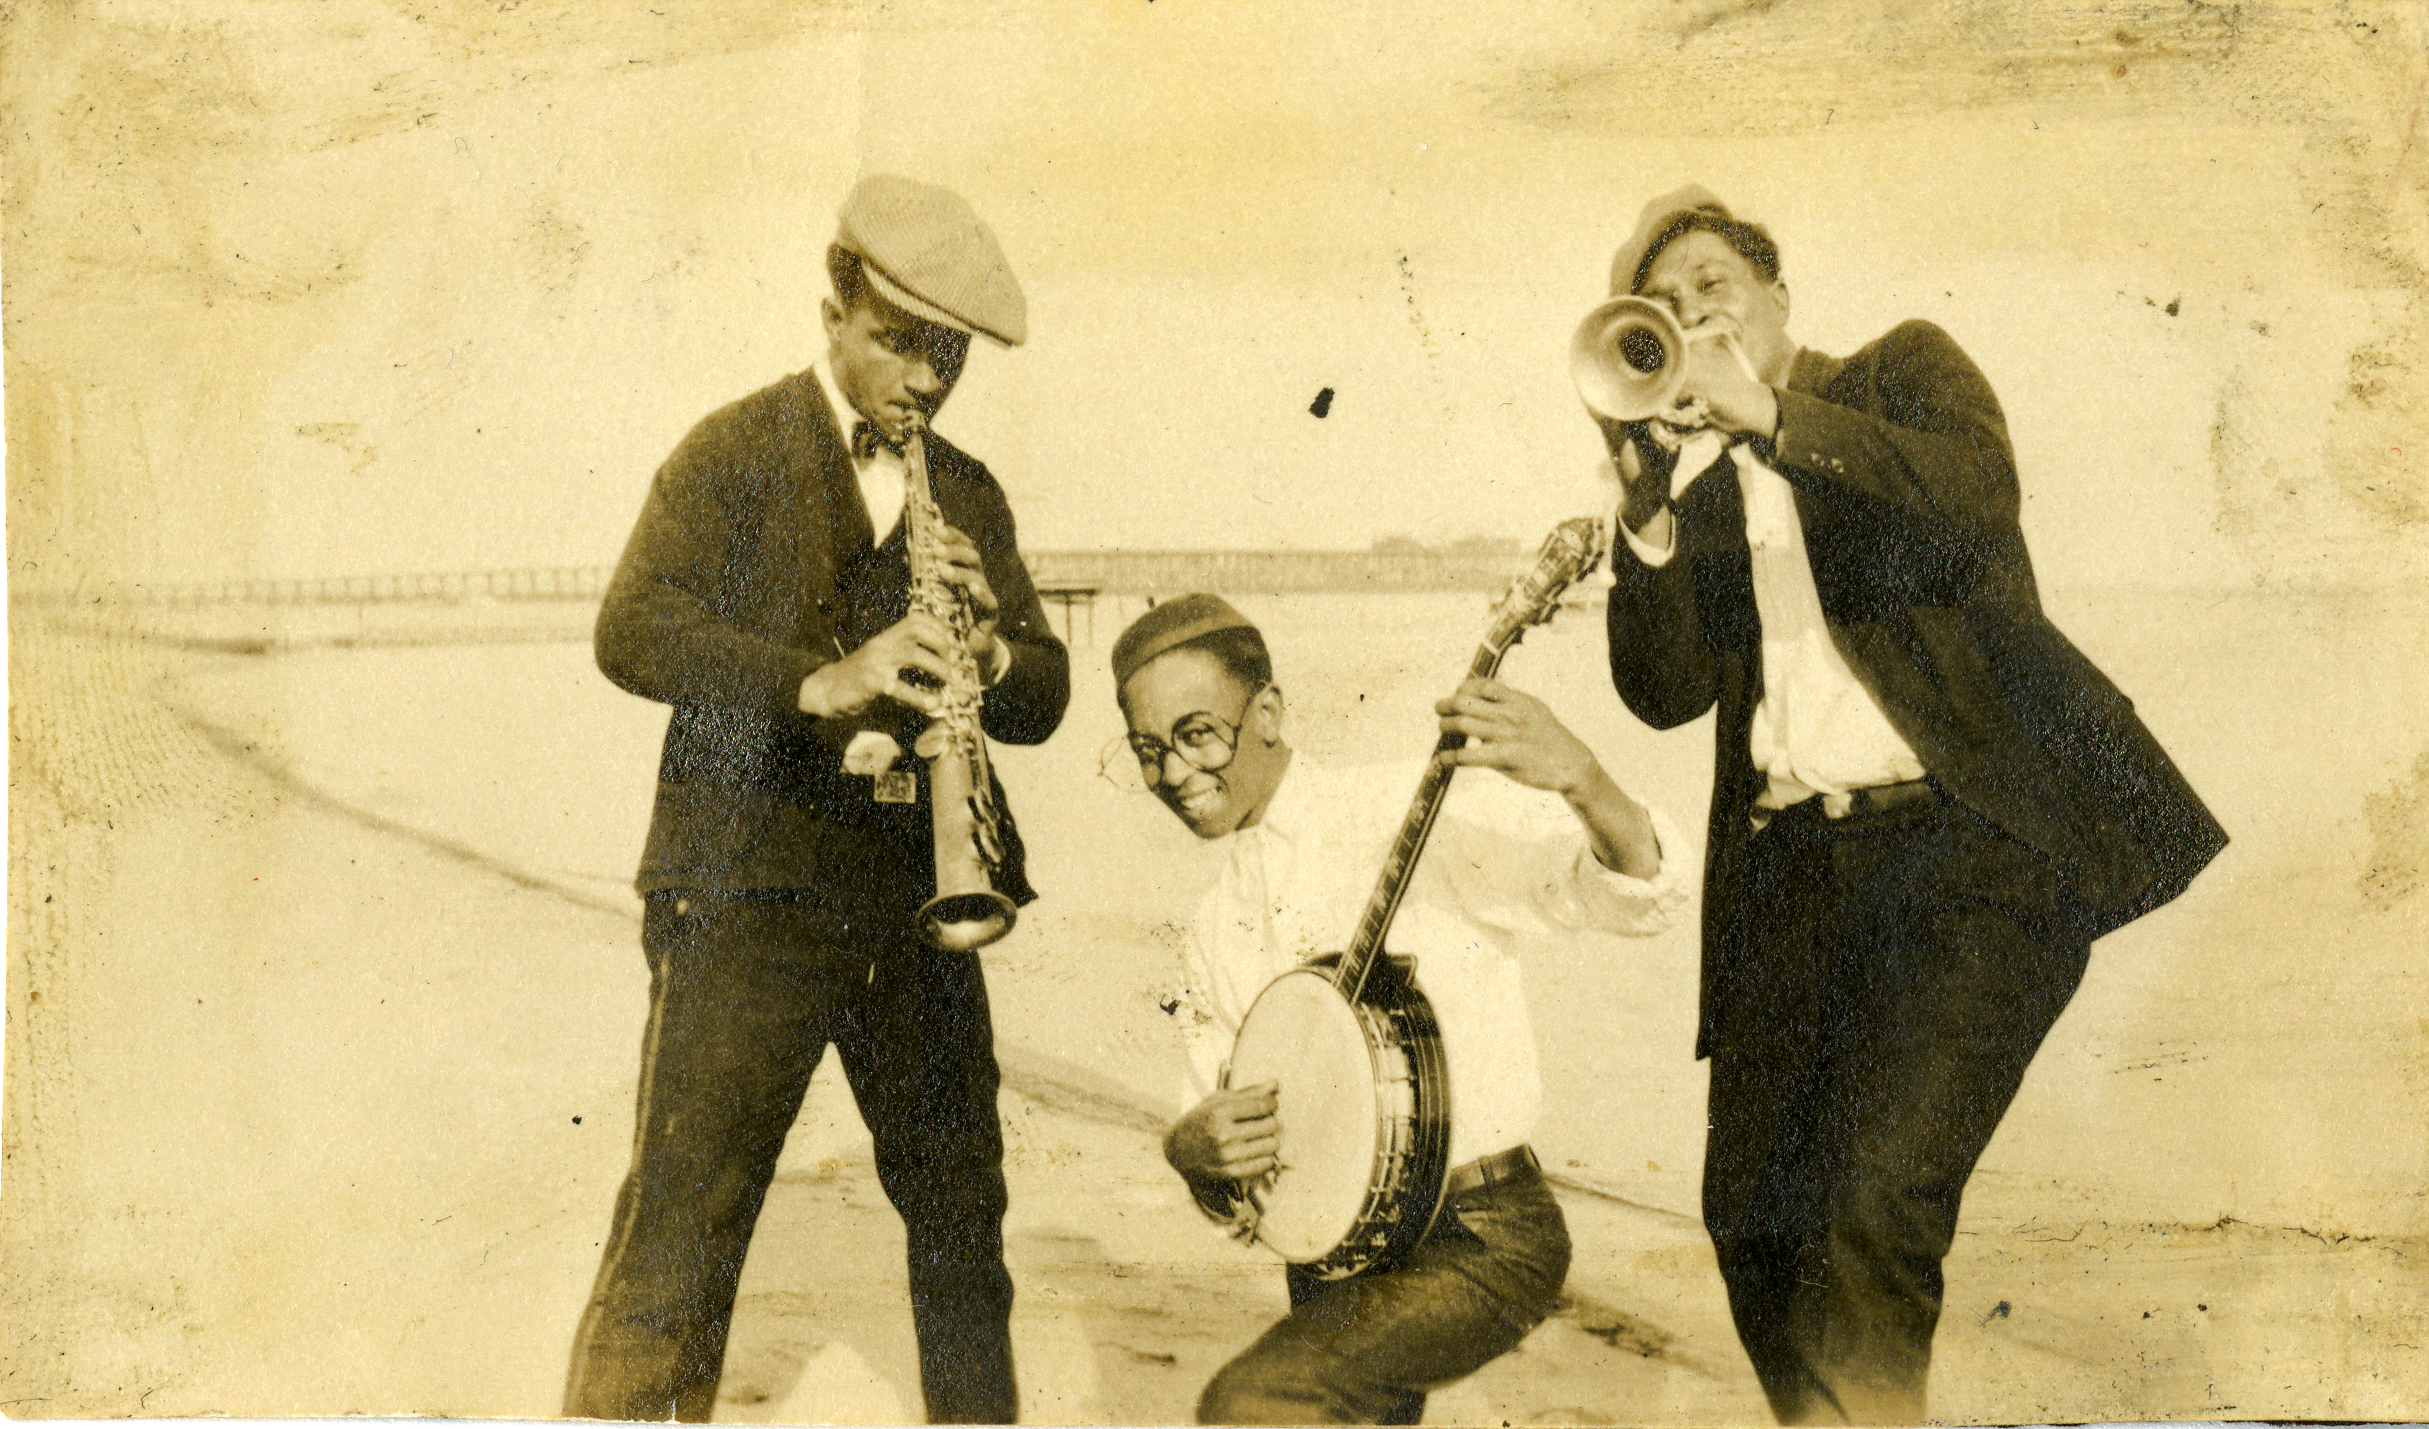 Lee Collins, Danny Barker, and Arthur Derbigny on the beach in Pensacola, Florida; 1928